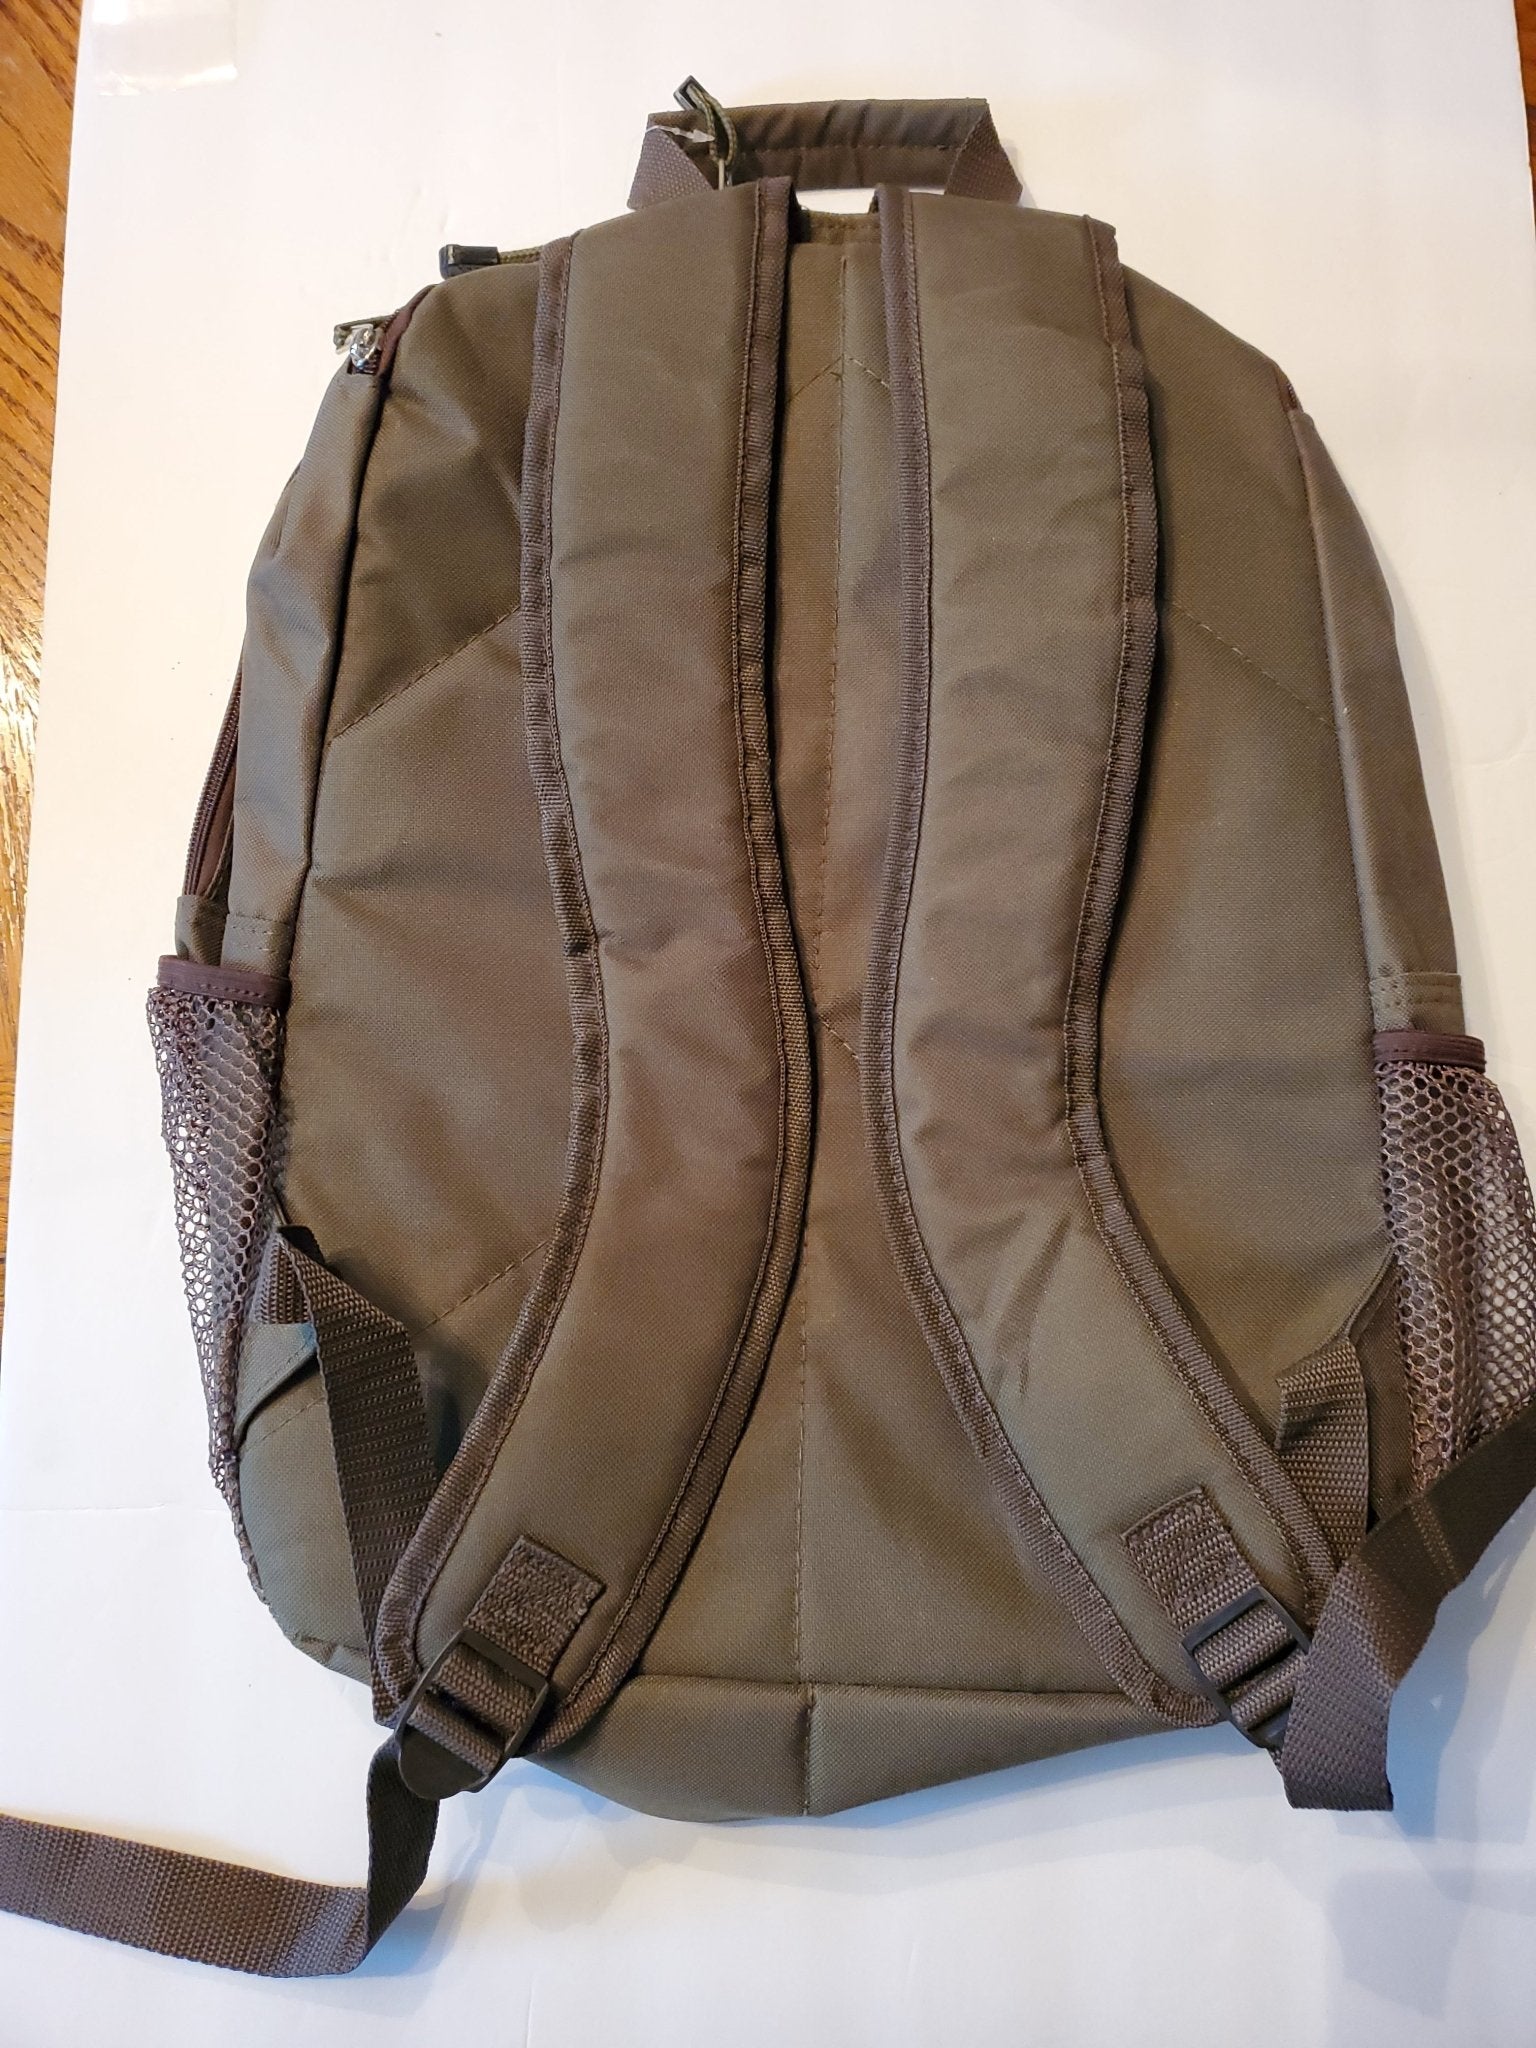 Eastsport Outdoor Company Green Backpack - Bargainwizz